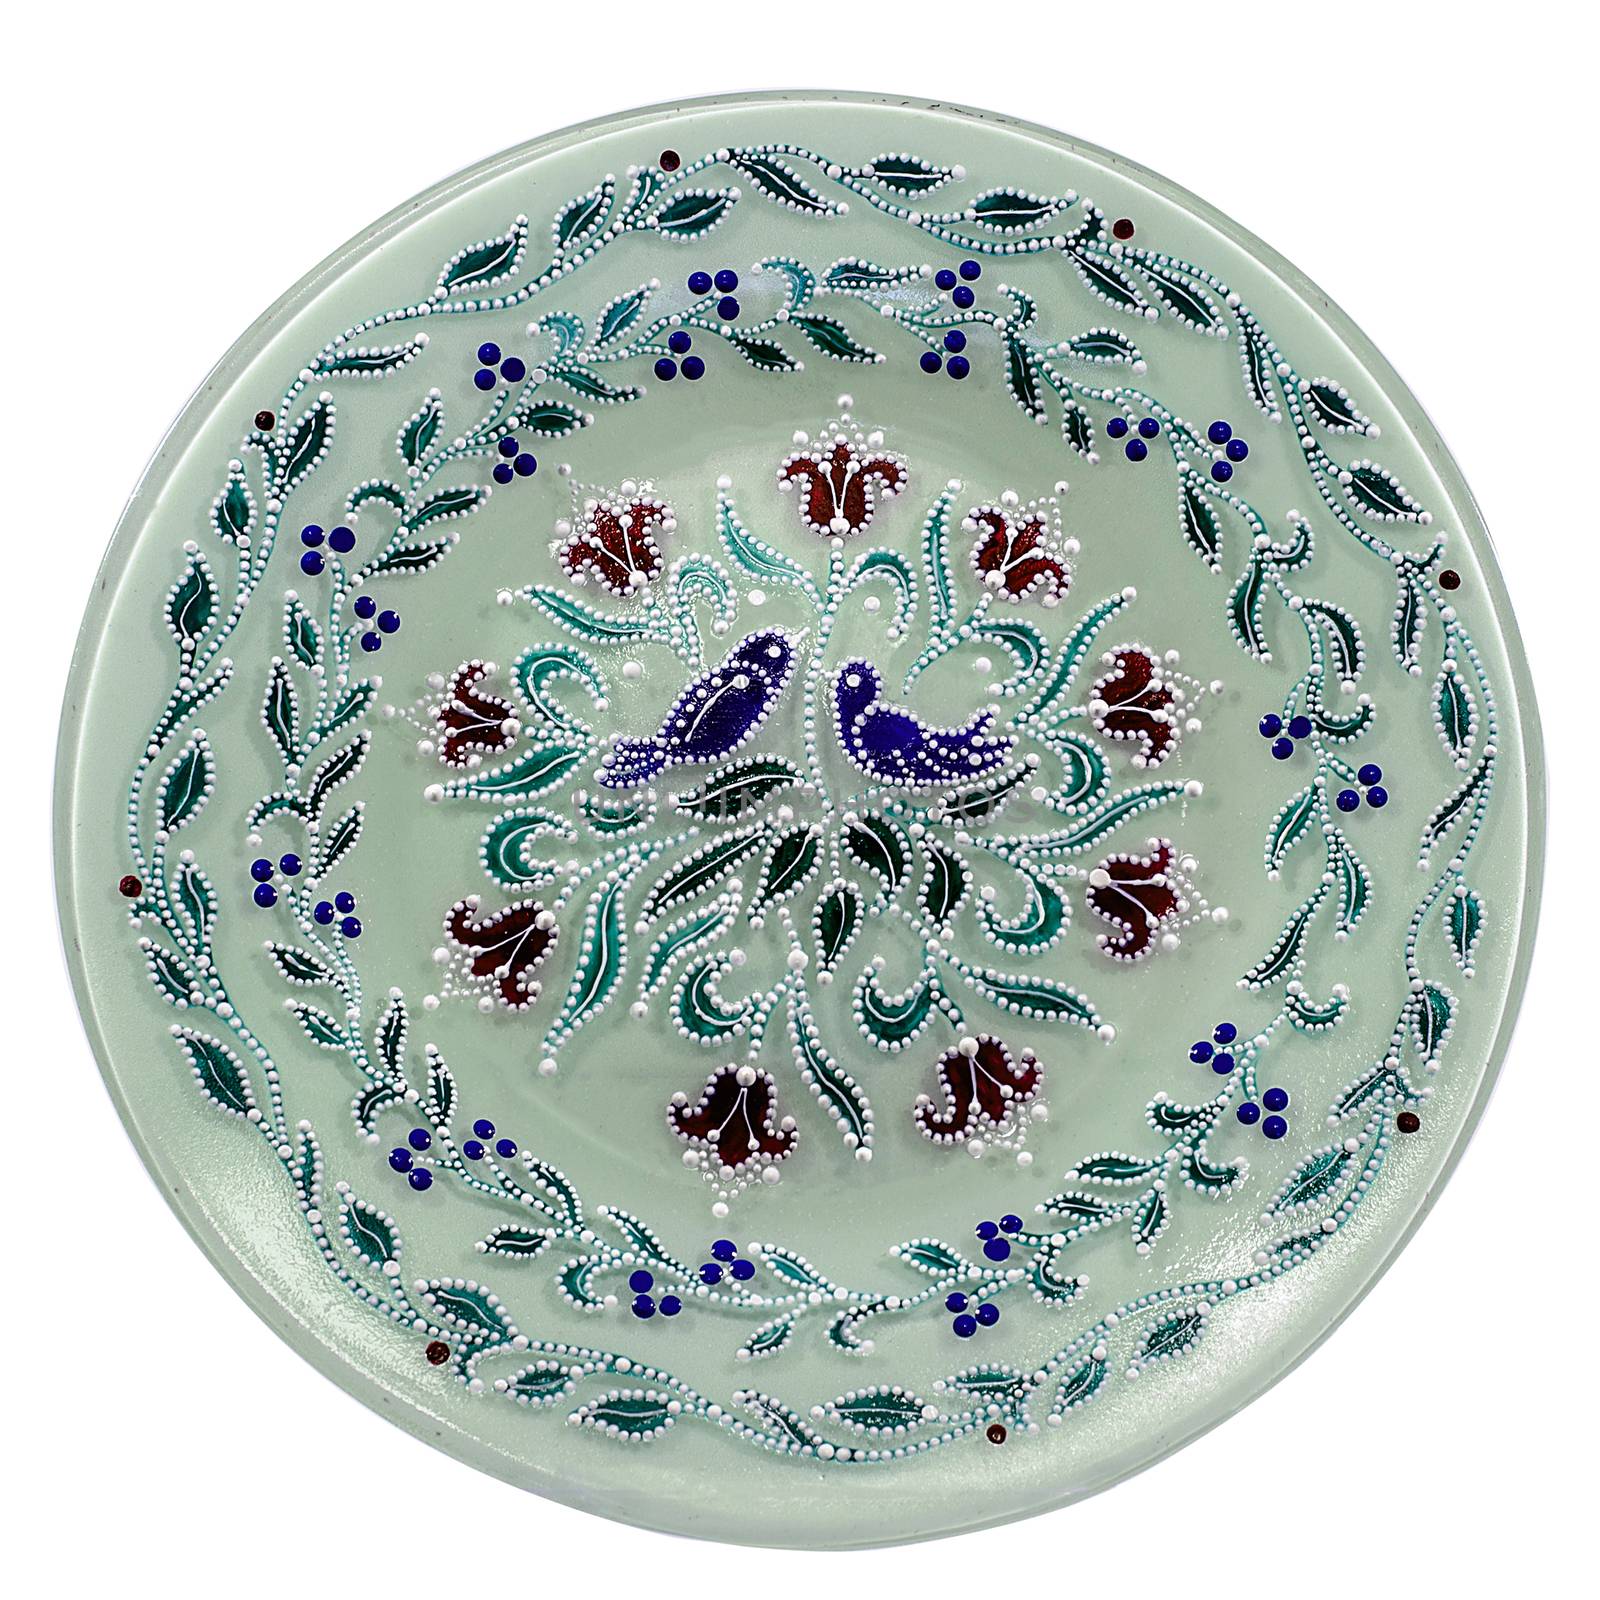 Decorative ceramic dish painted with hands. Art, handmade